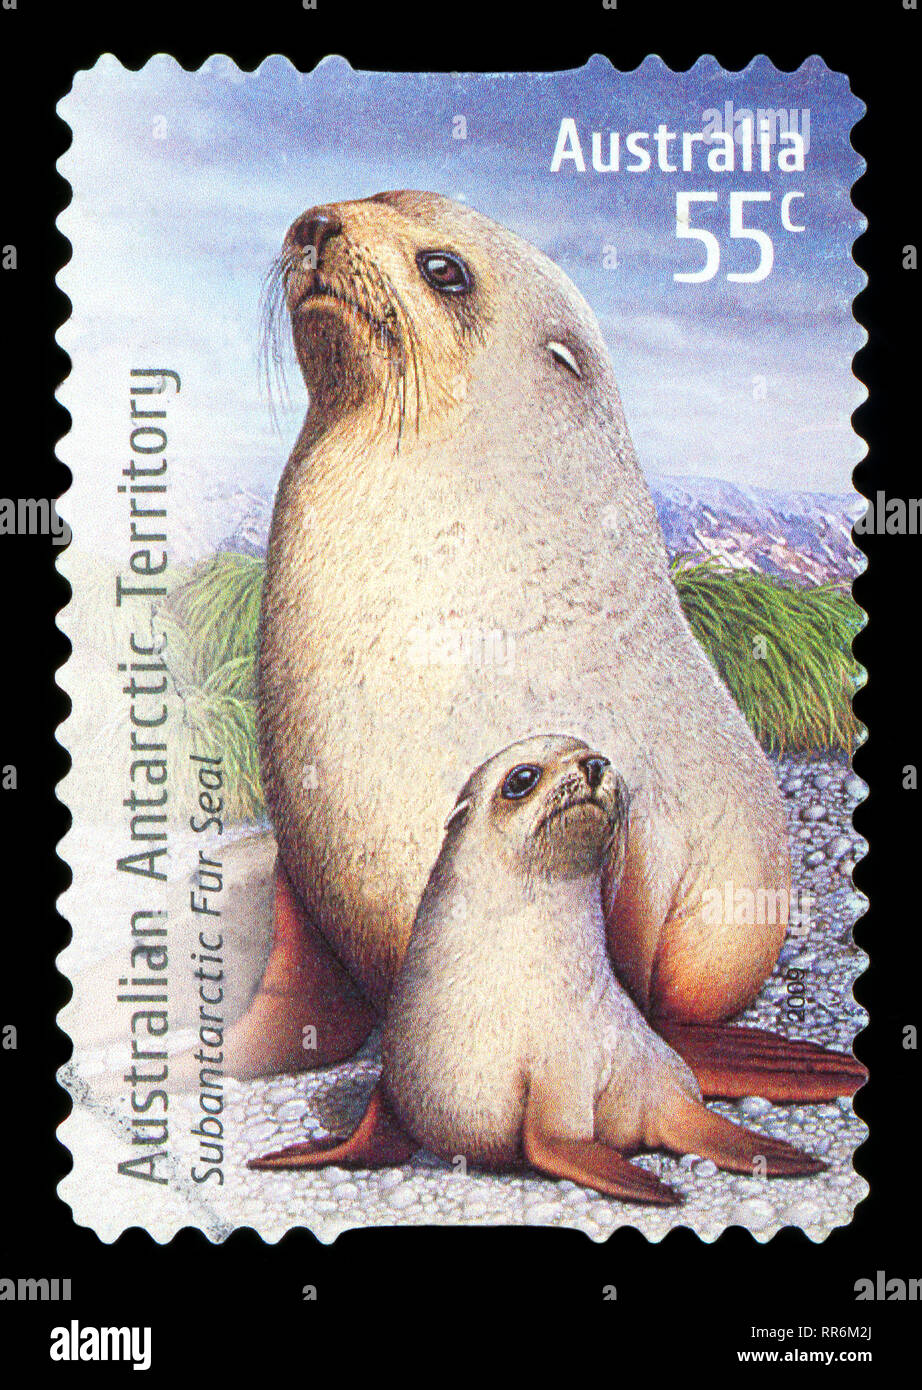 AUSTRALIA - CIRCA 2009: A stamp printed in Australia shows image of a Subantarctic Fur Seal, in Australian Antarctic Territory, circa 2009. Stock Photo